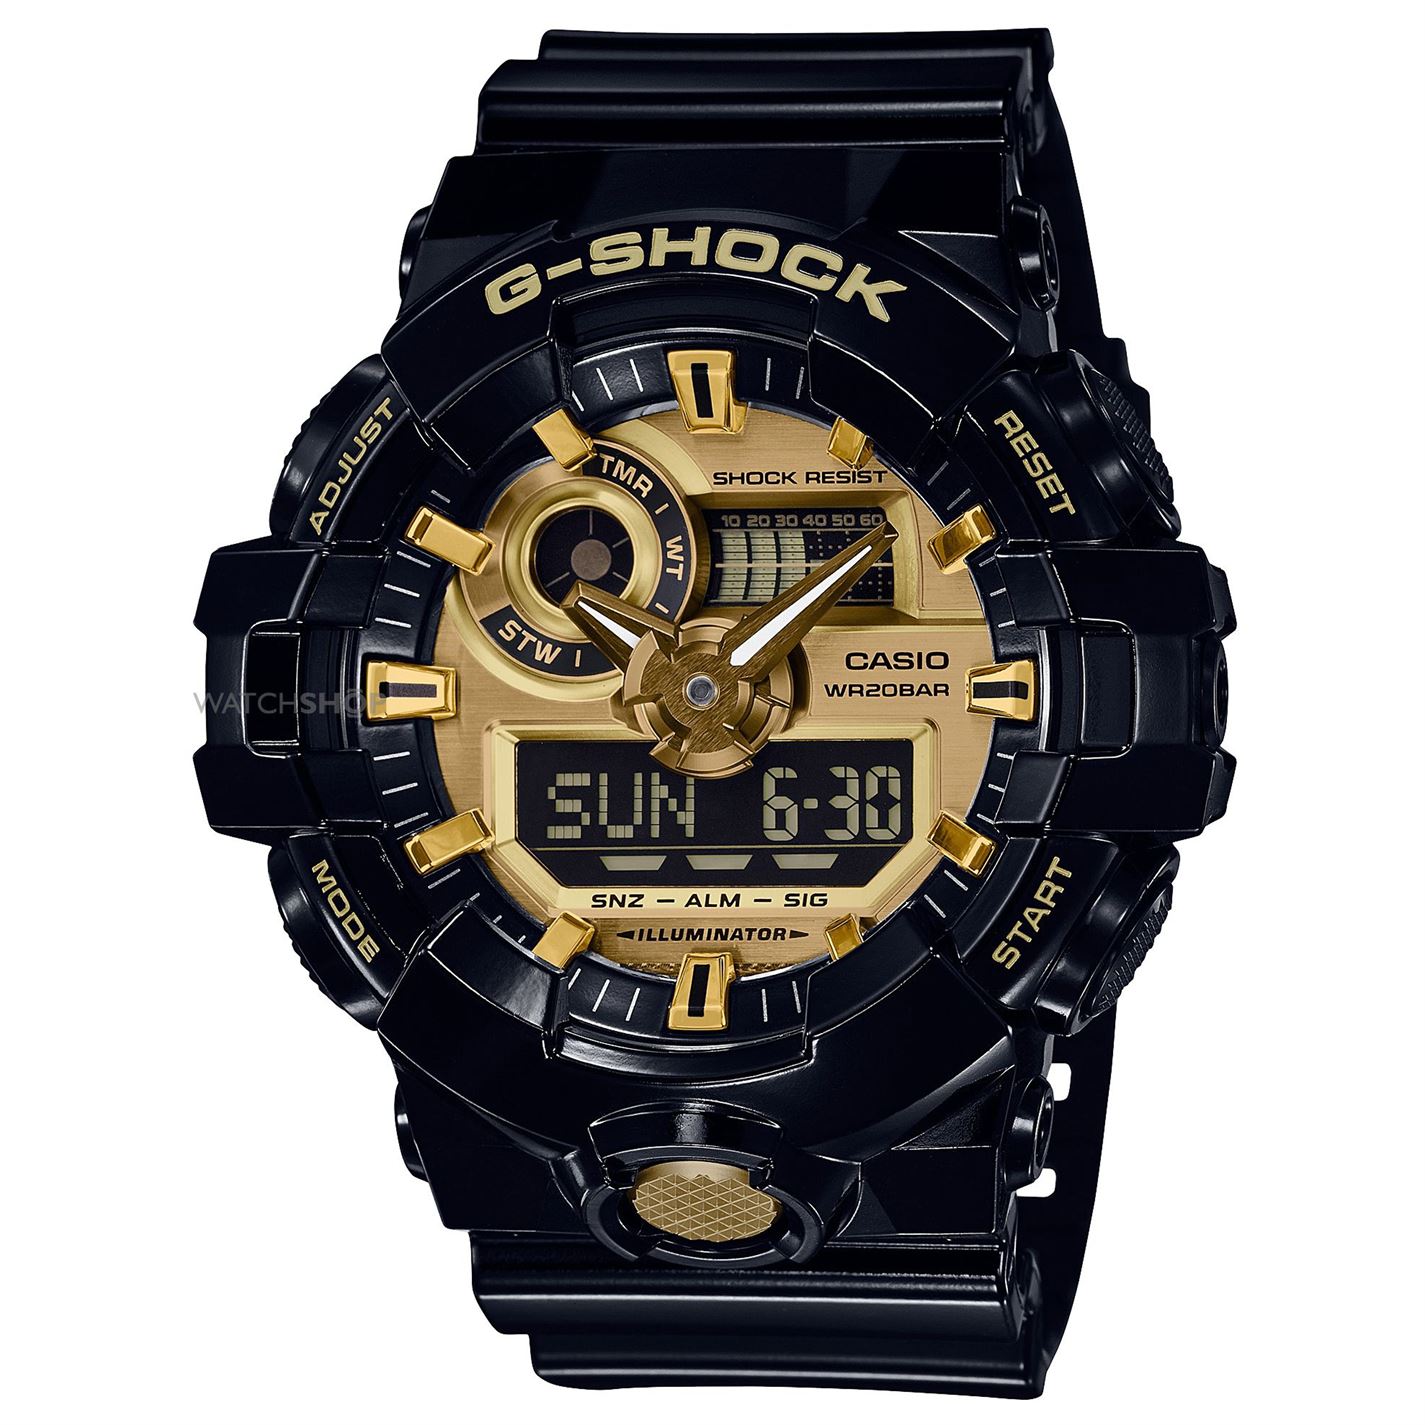 G Shock 710gb 1a Watch